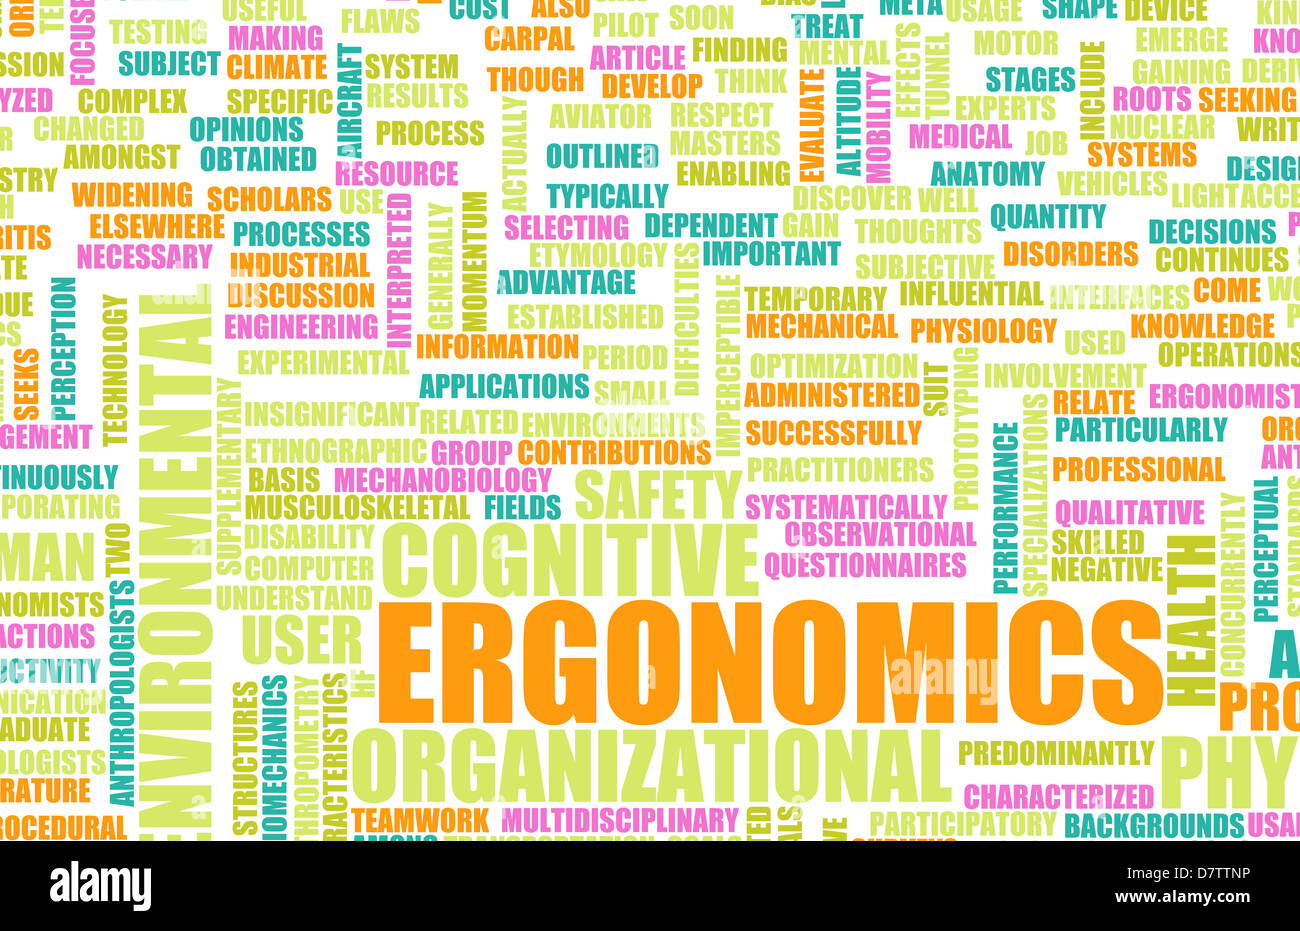 Ergonomics Science and Study Human Factor Concept Stock Photo